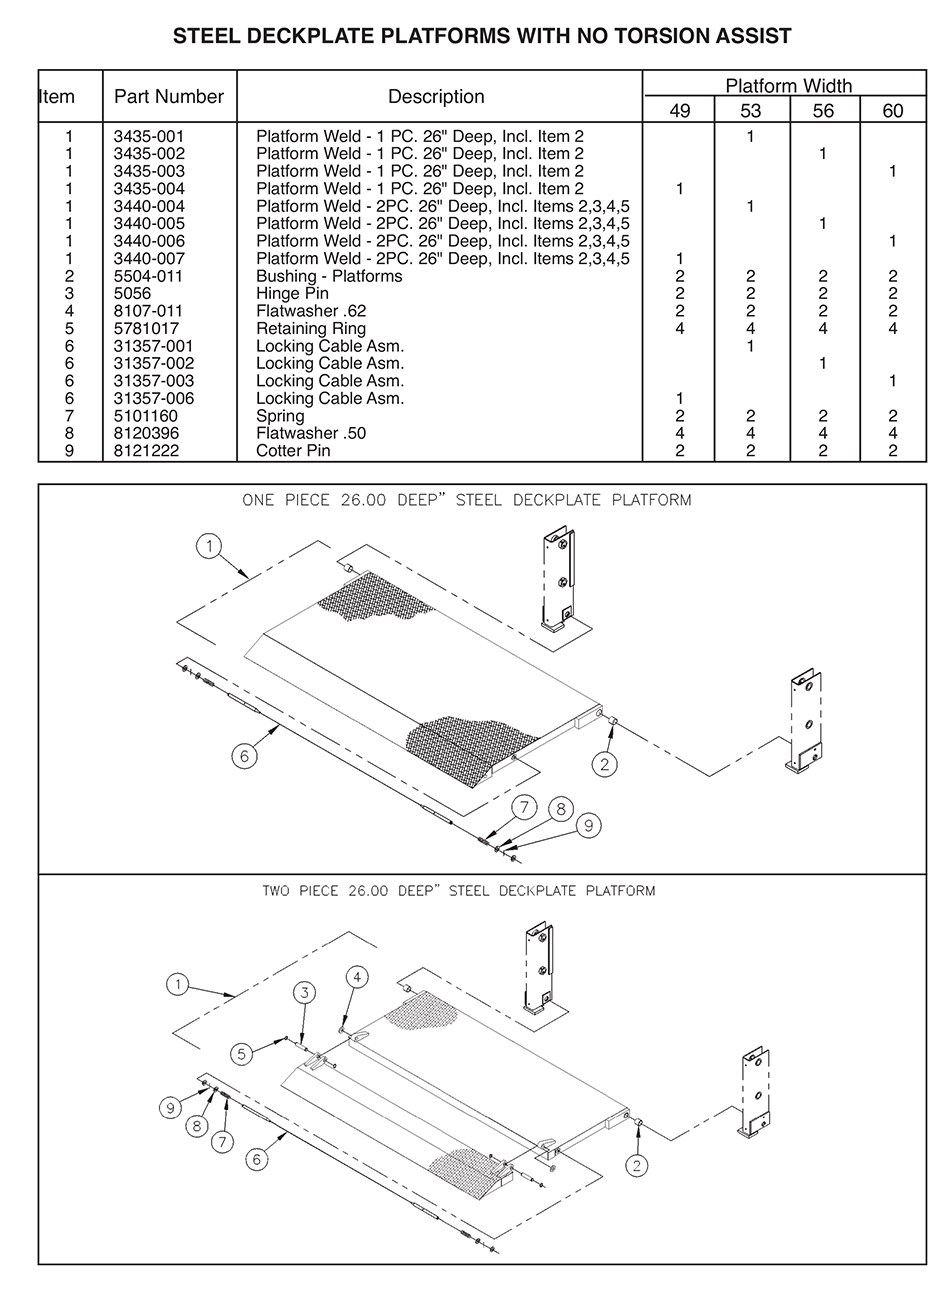 TT15ET Steel Deckplate Platforms (No Torsion Assist) Diagram